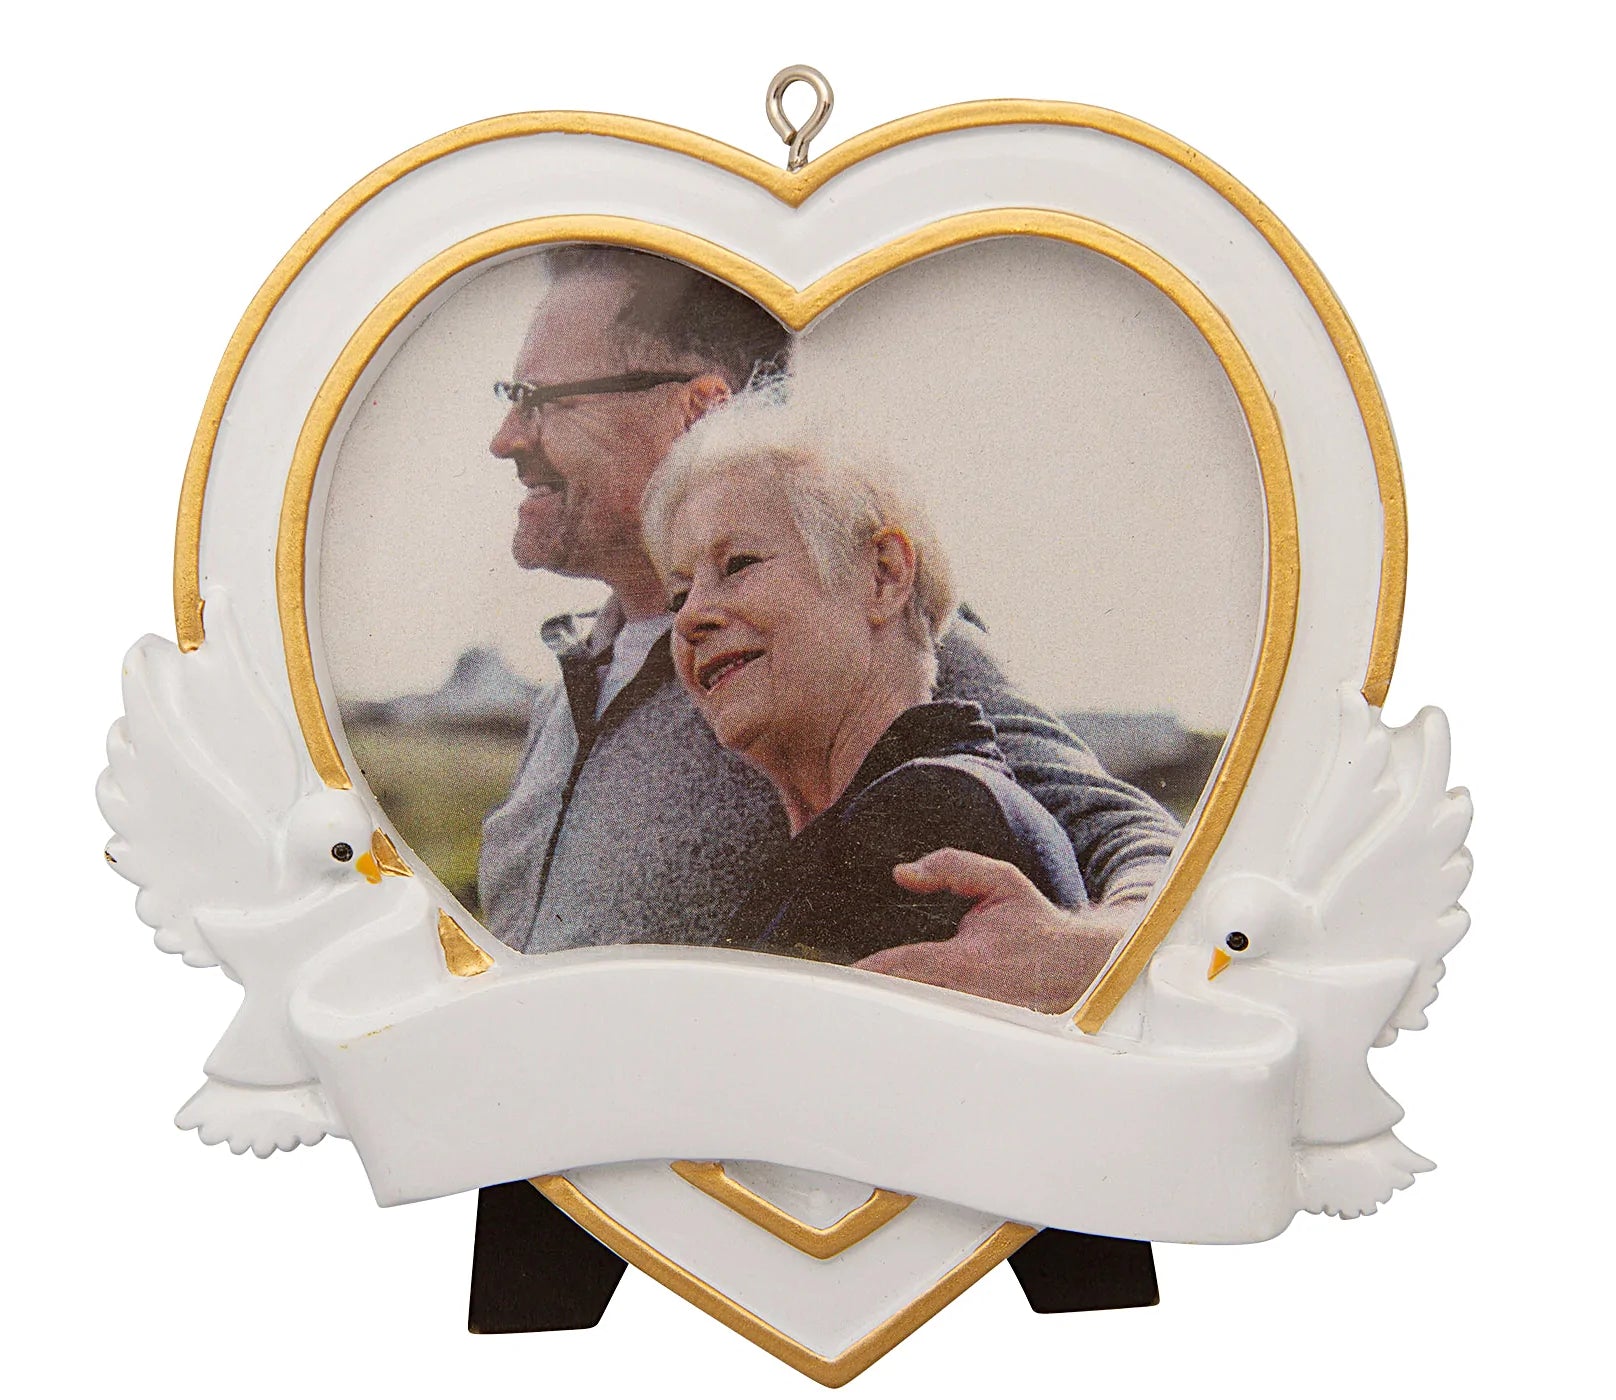 Memorial Heart - Personalized Photo Ornament